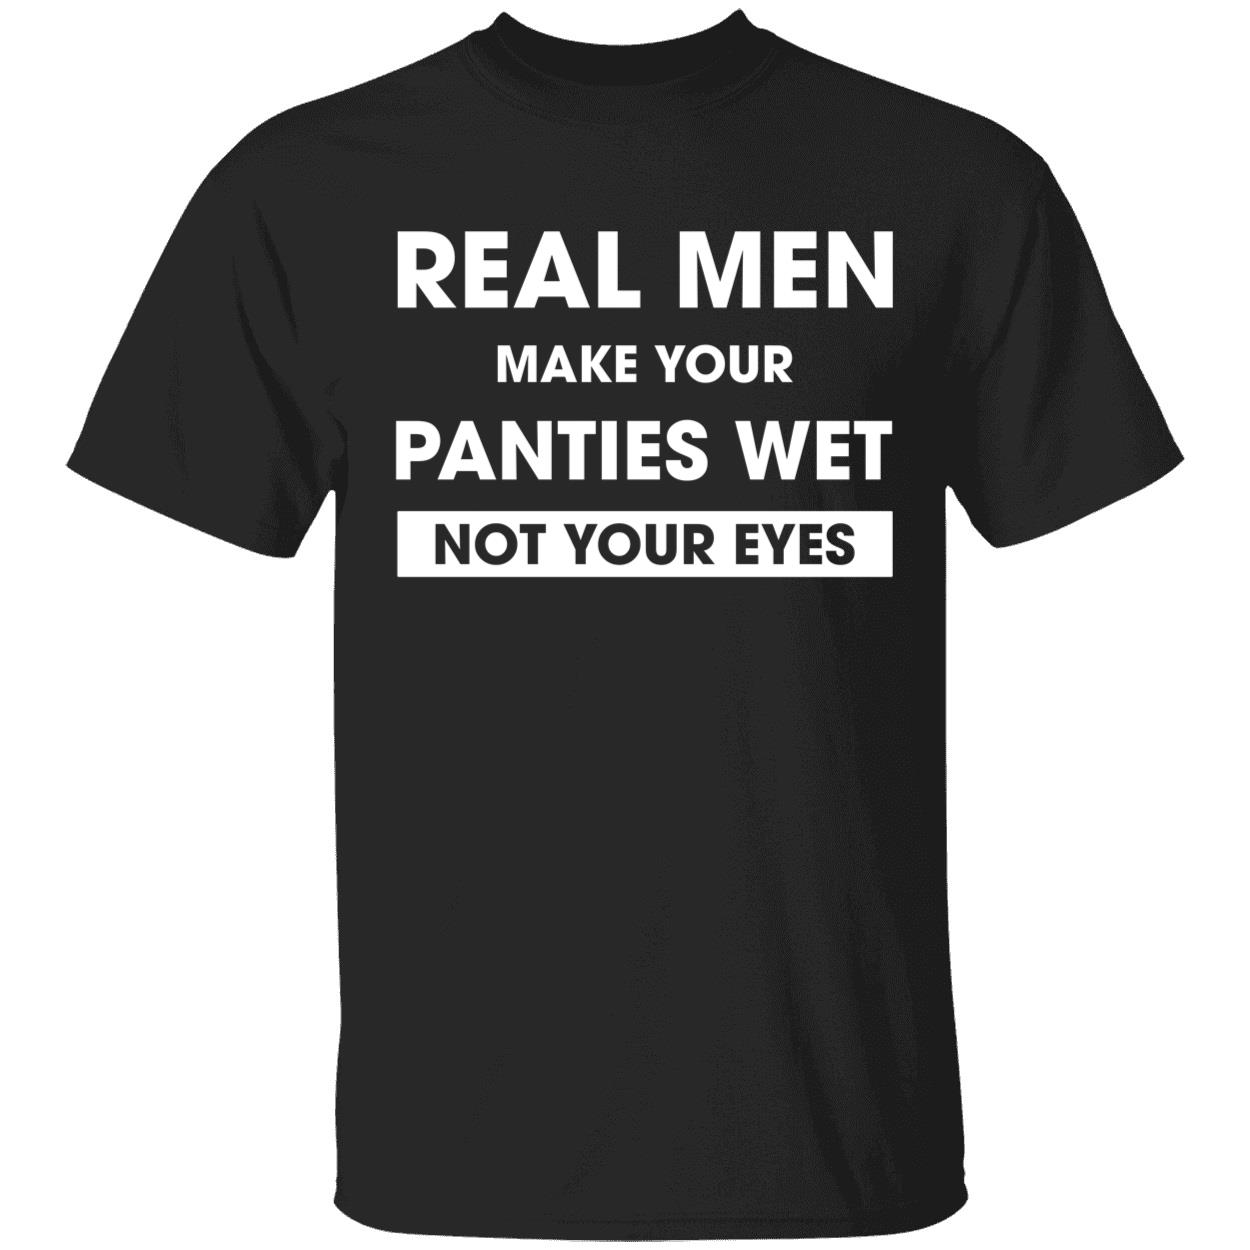 https://endastore.com/wp-content/uploads/2022/10/endas-real-men-make-your-panties-wet-not-your-eyes_1_1.jpg